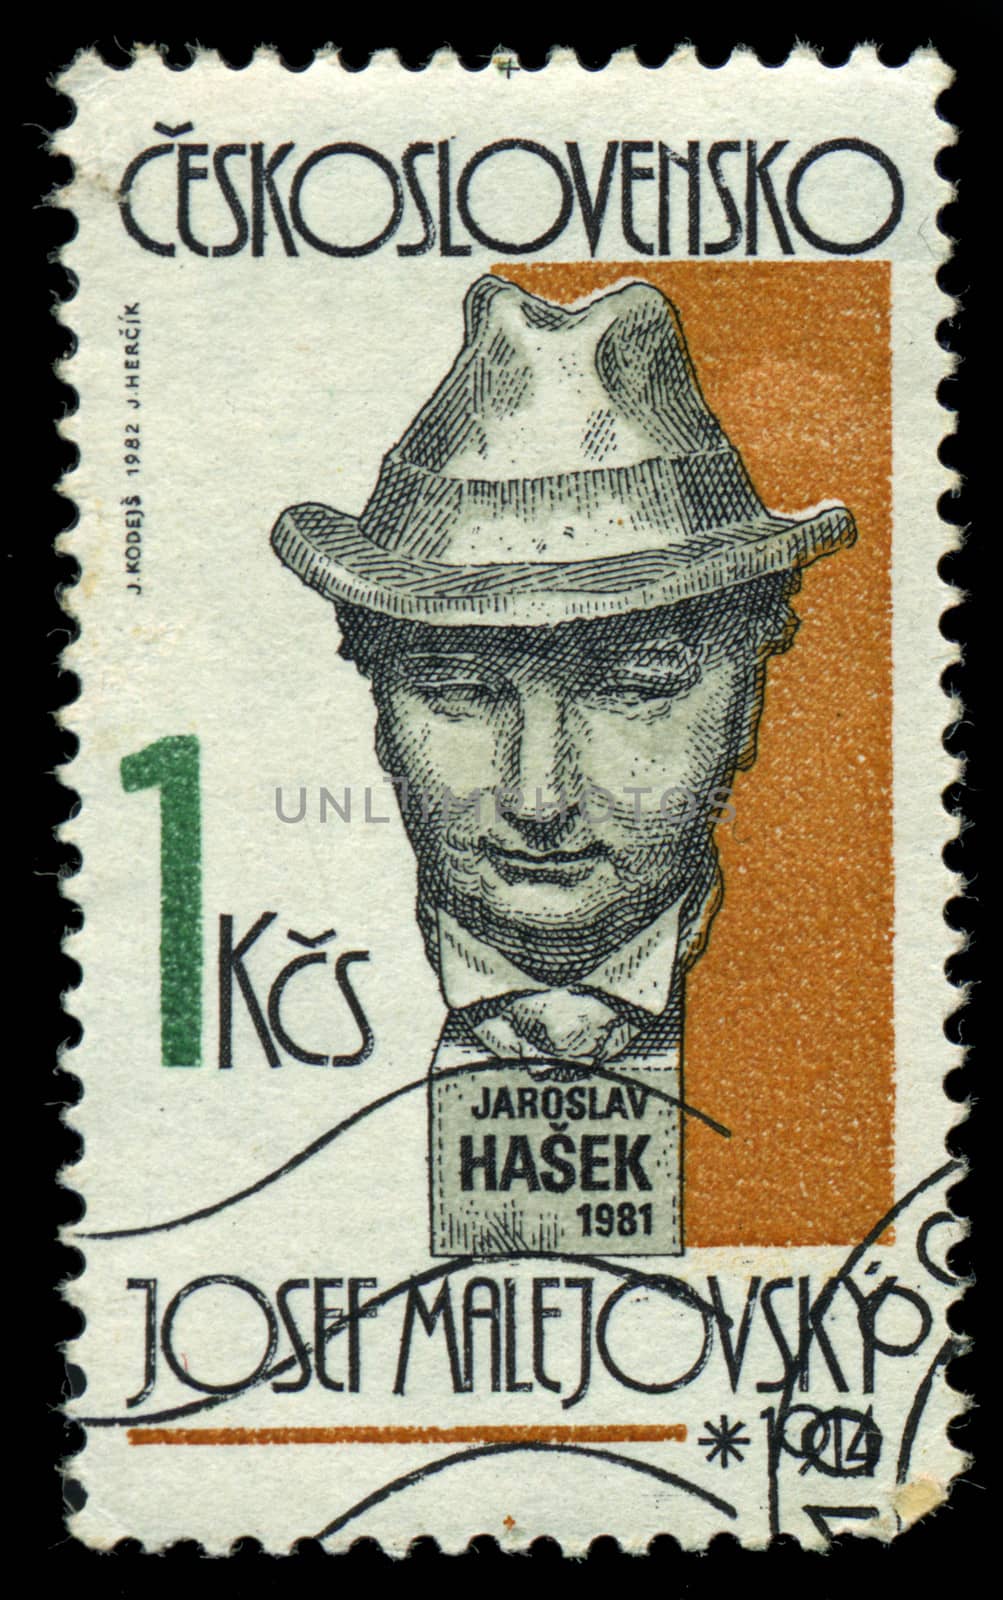 CZECHOSLOVAKIA - CIRCA 1982: A stamp printed in Czechoslovakia, shows sculpture portrait of Jaroslav Hasek by sculptor Josef Malejovsky, circa 1982